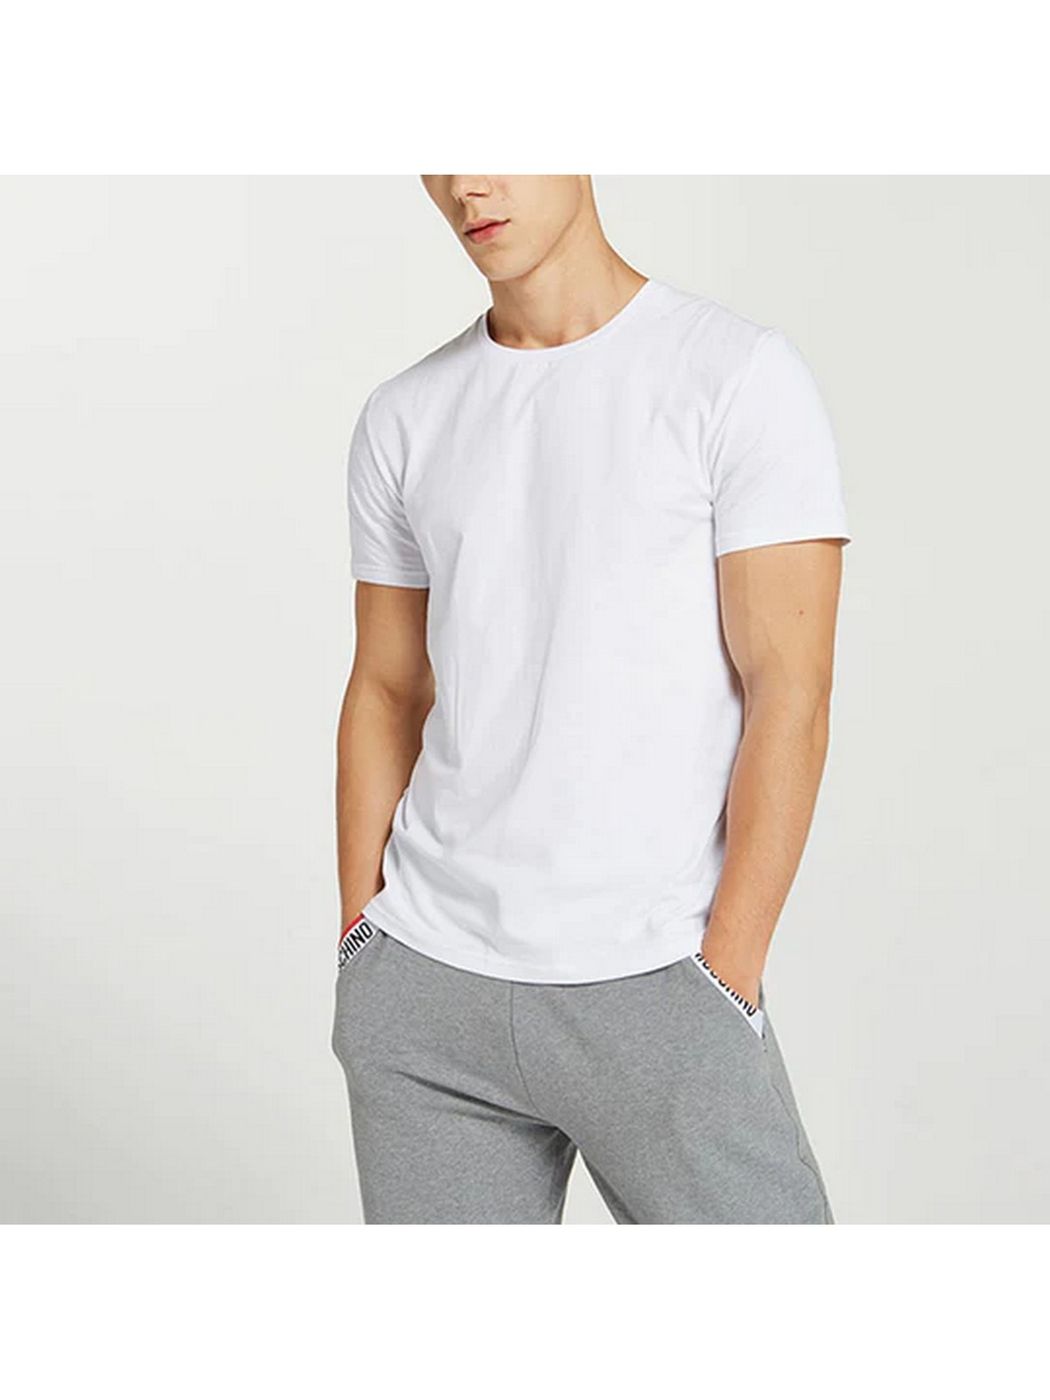 MOSCHINO UNDERWEAR T-Shirt e Polo Uomo  A1903 8101 0001 Bianco